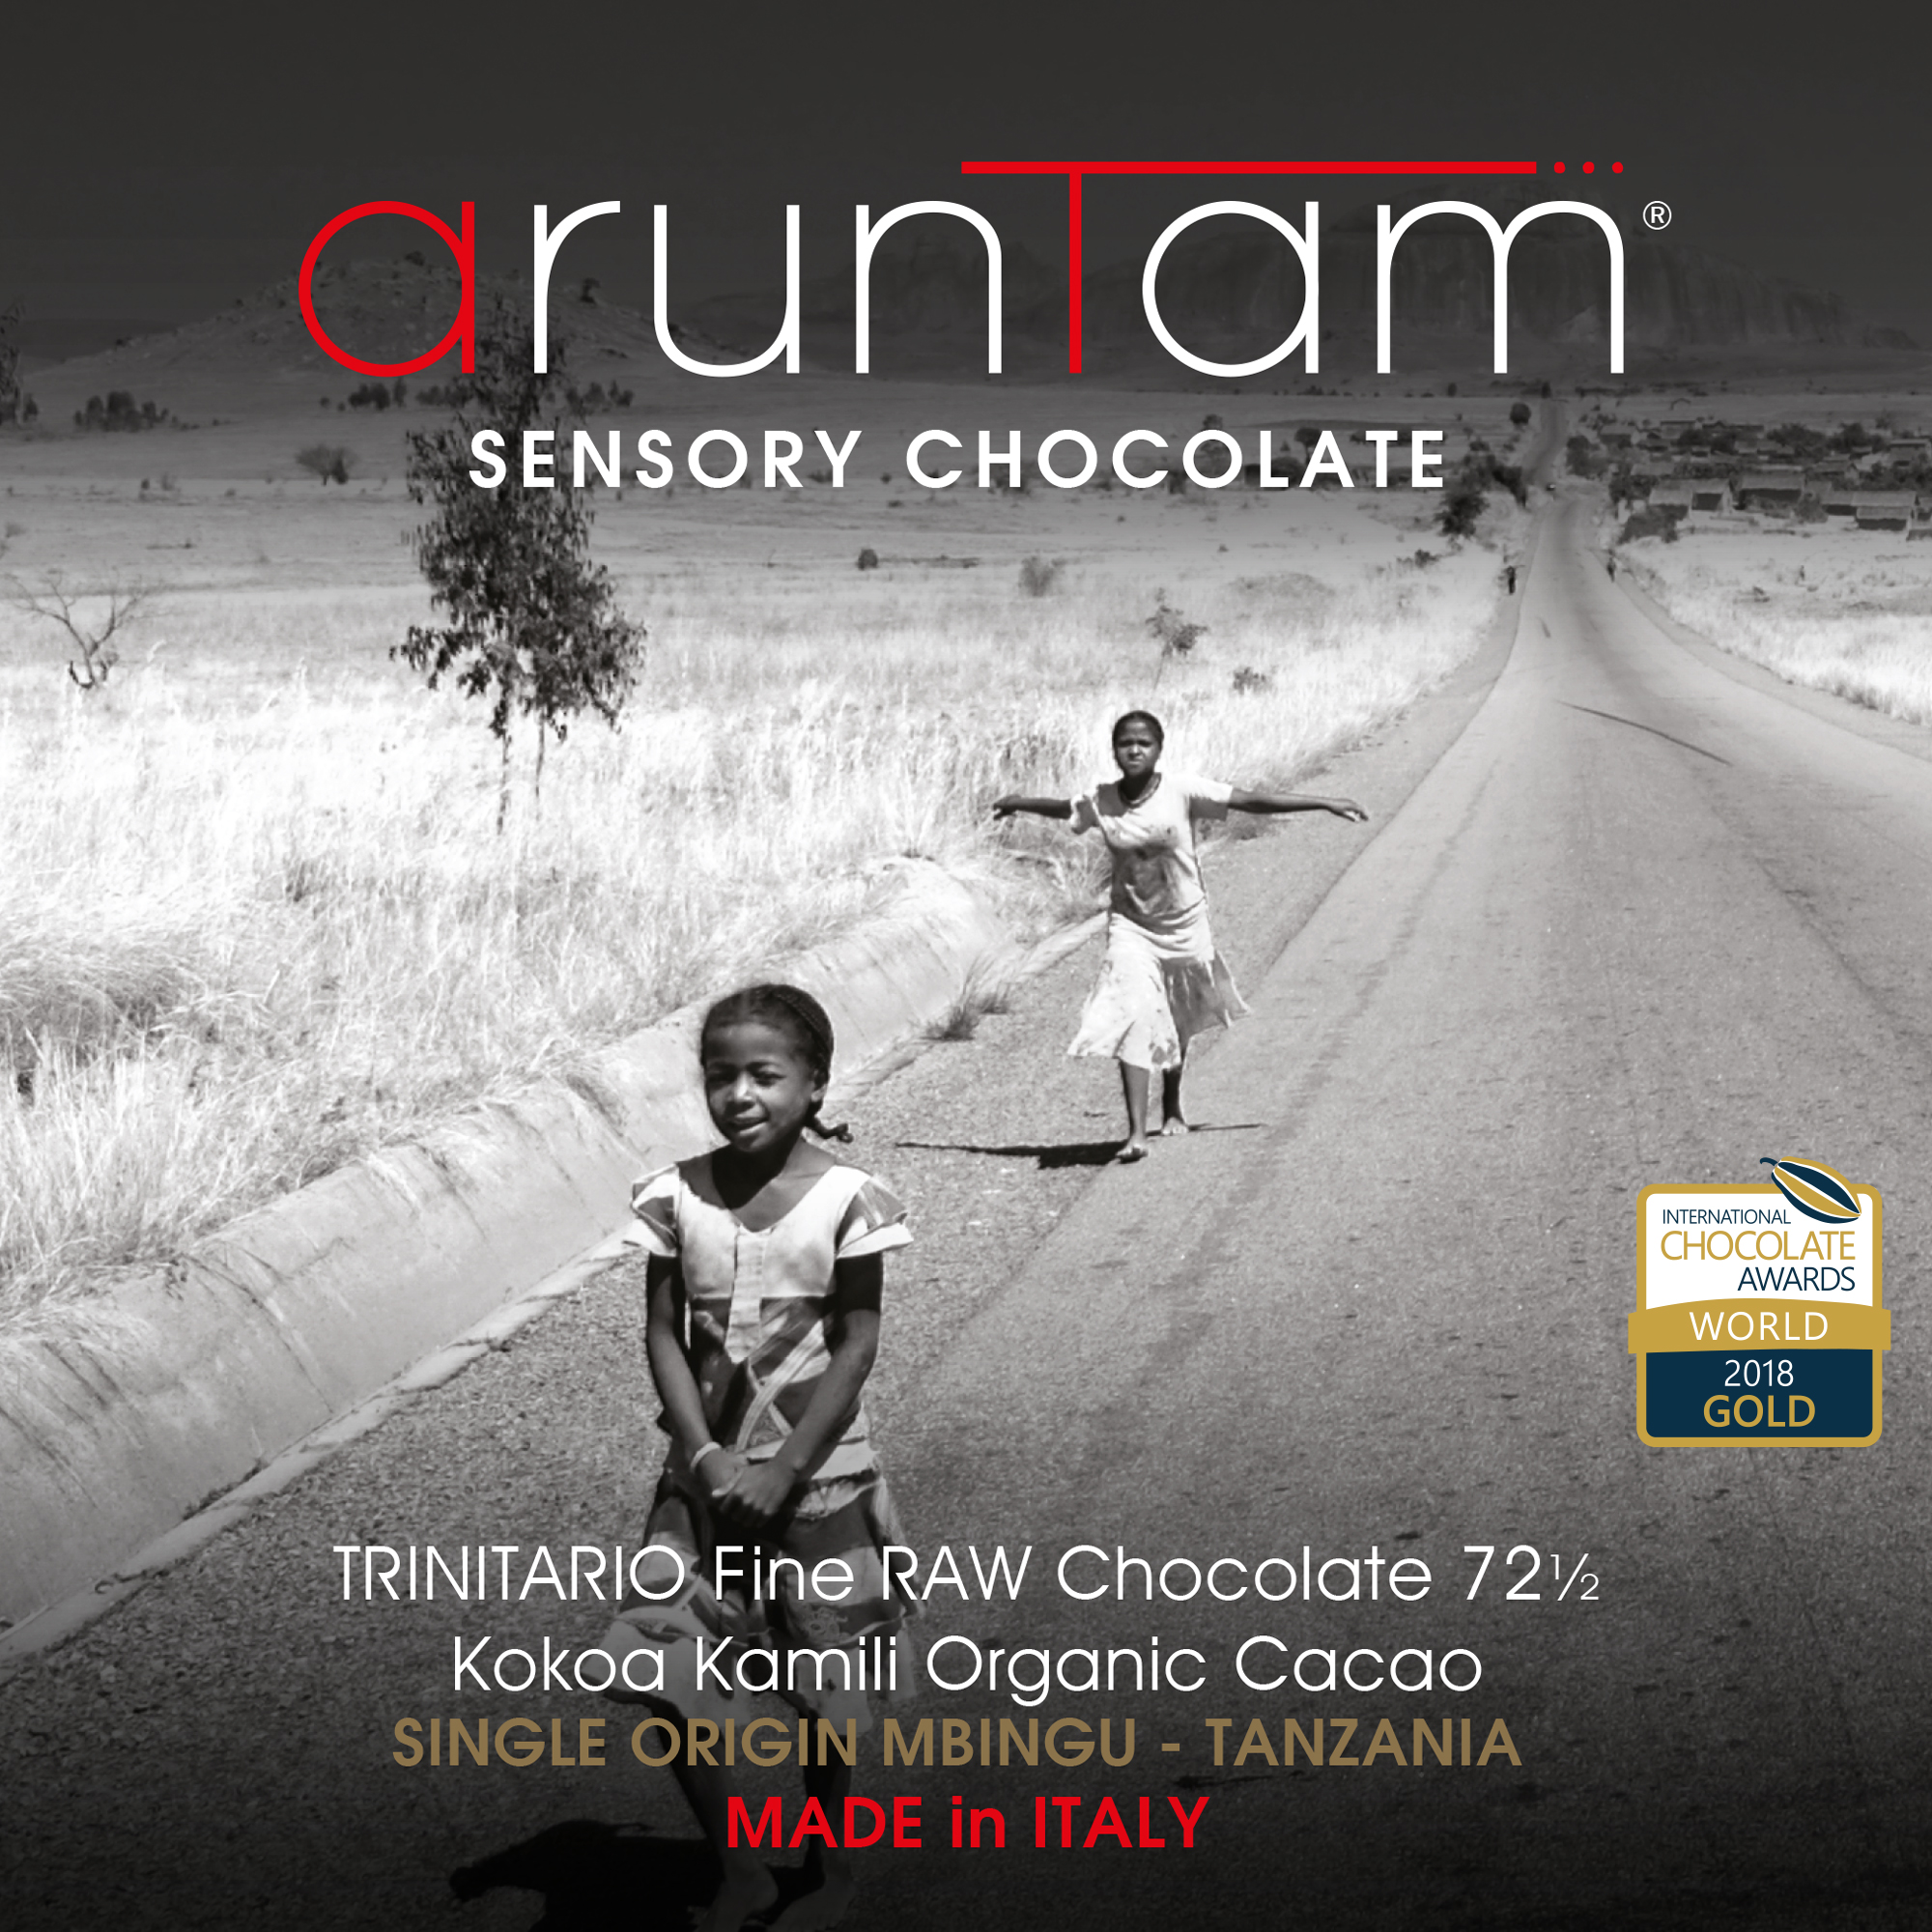 12-Trinitario-Fine-Raw-Chocolate-72-TANZANIA-AFRICA-gn